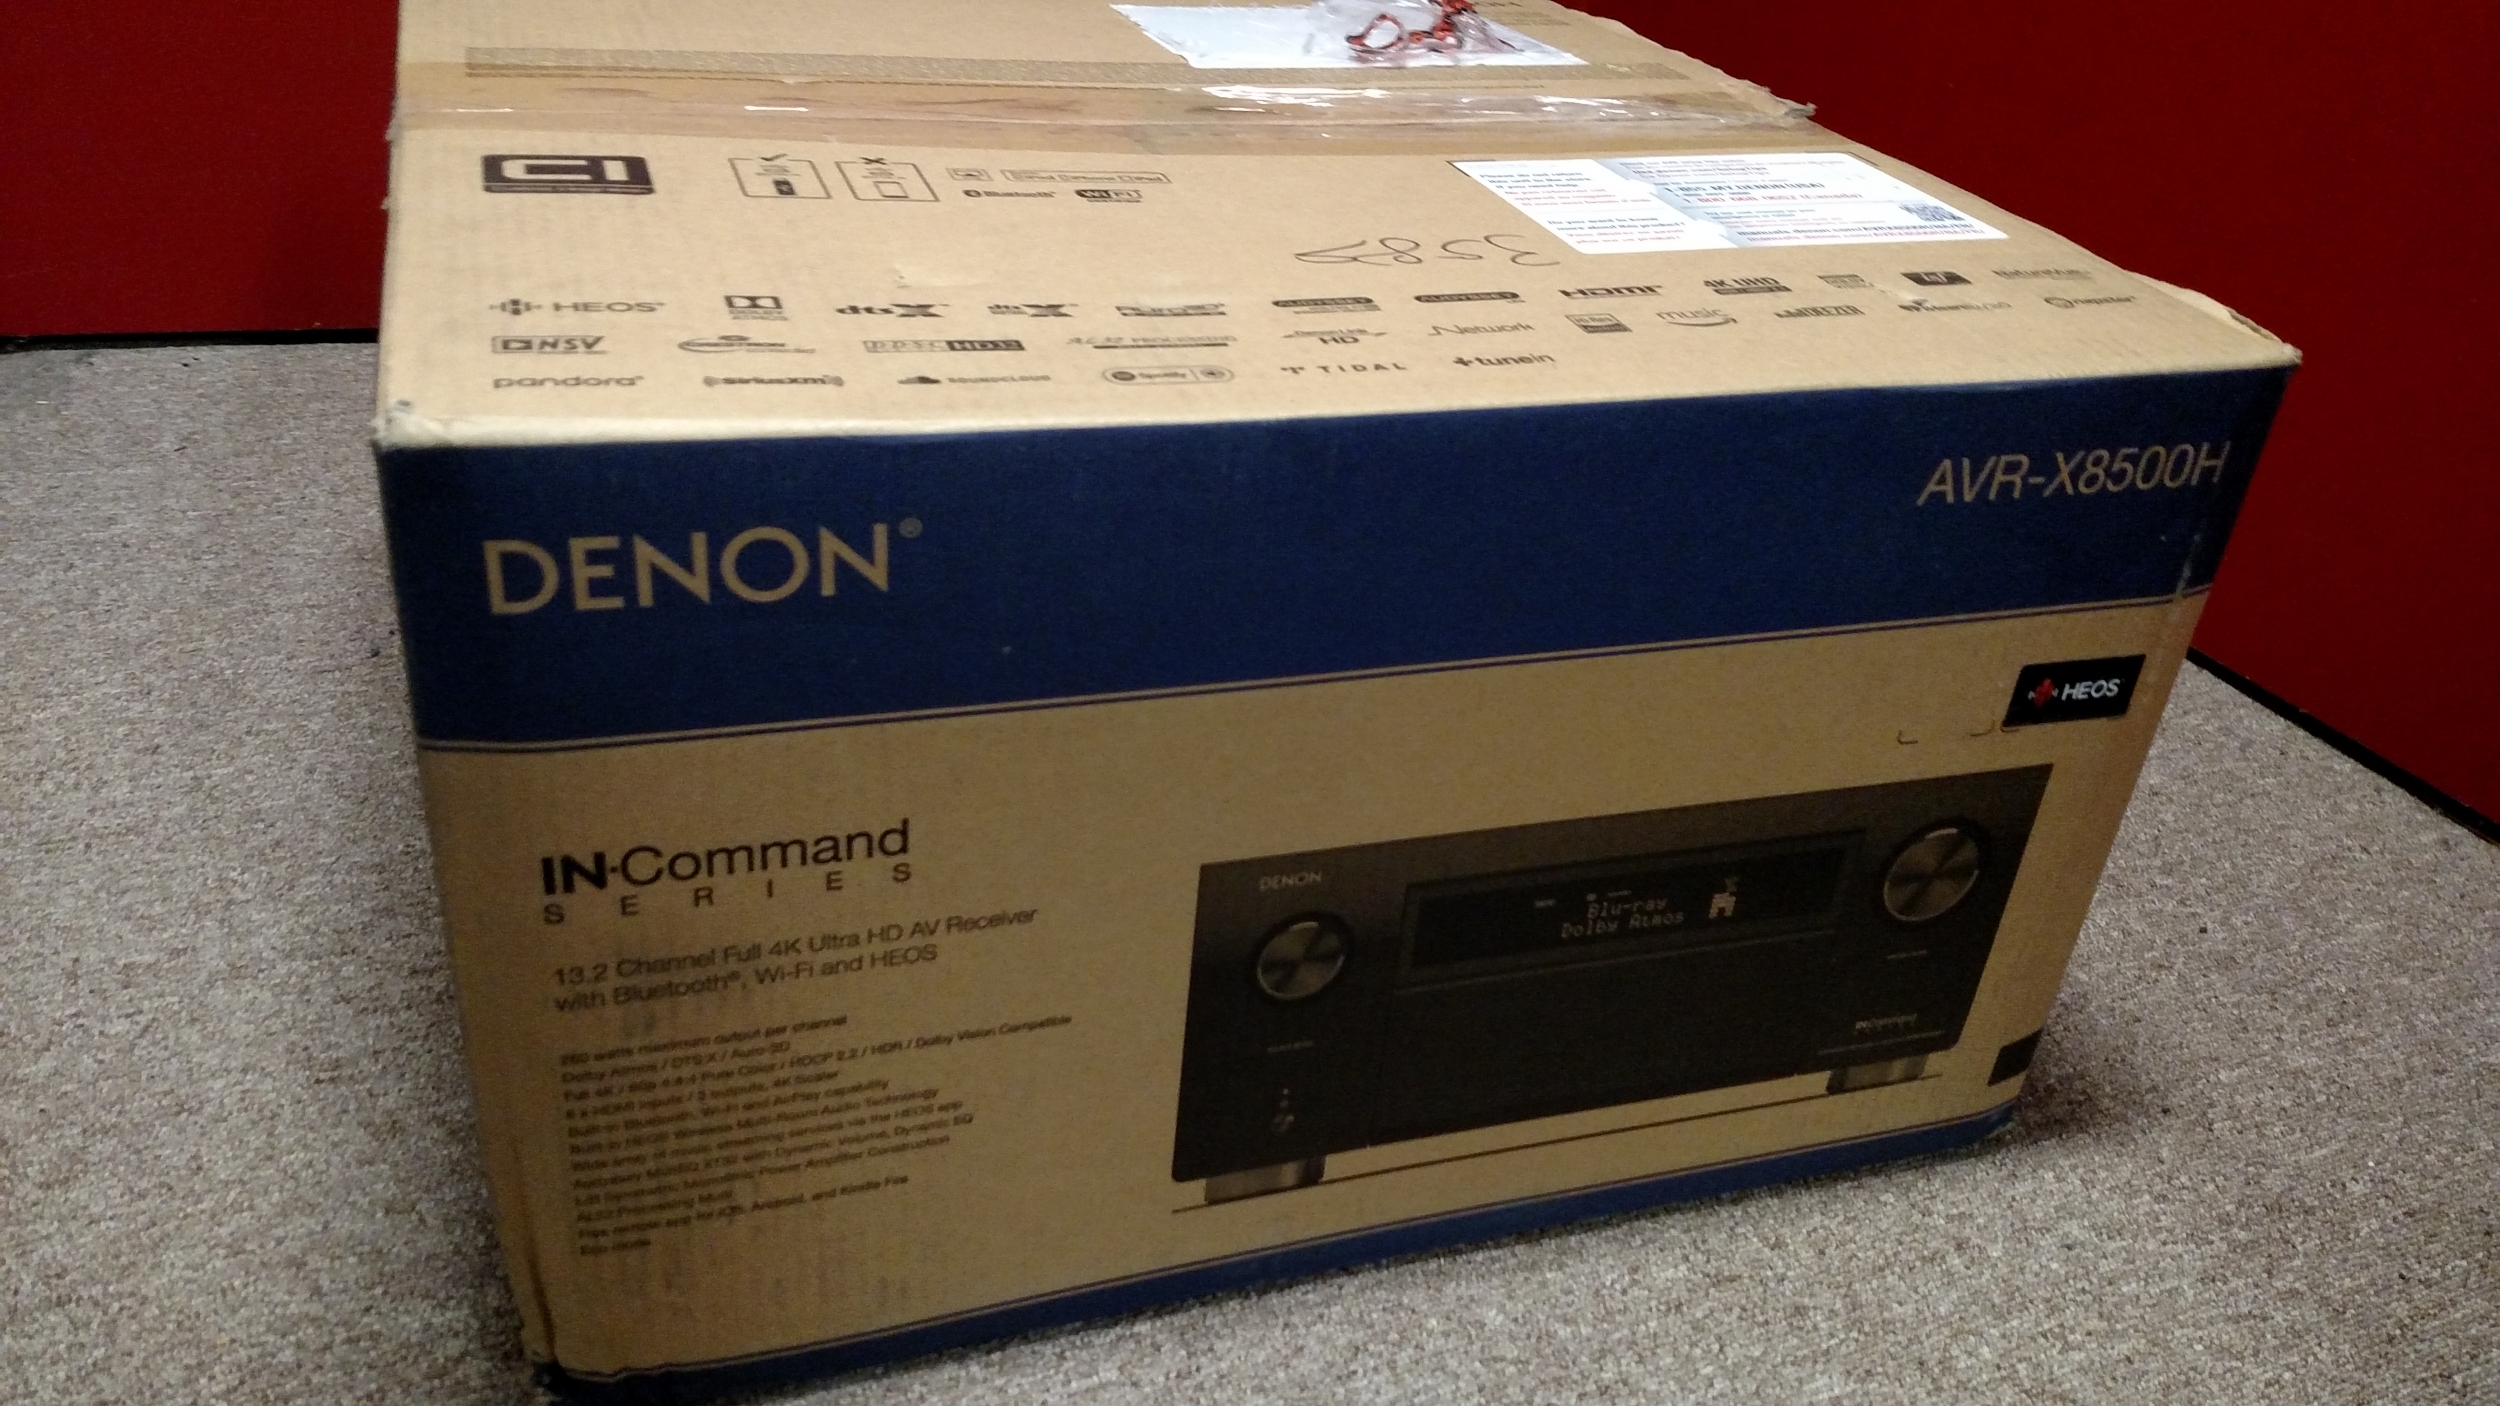 Denon AVR-X8500H box